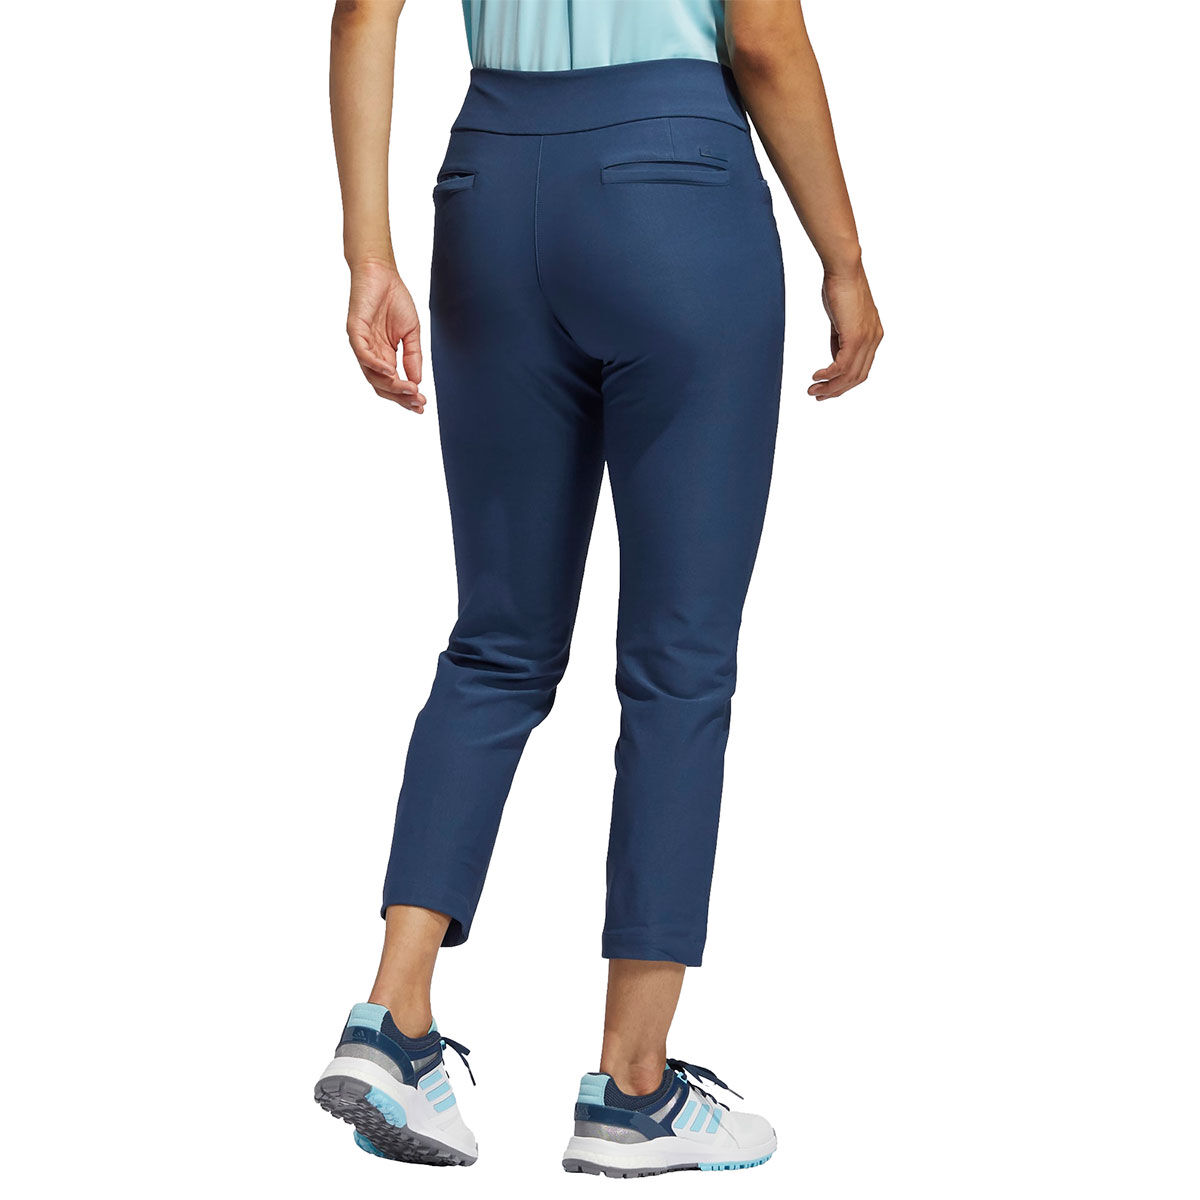 Adidas Ladies Golf Pants 2021 Buy  ishopz